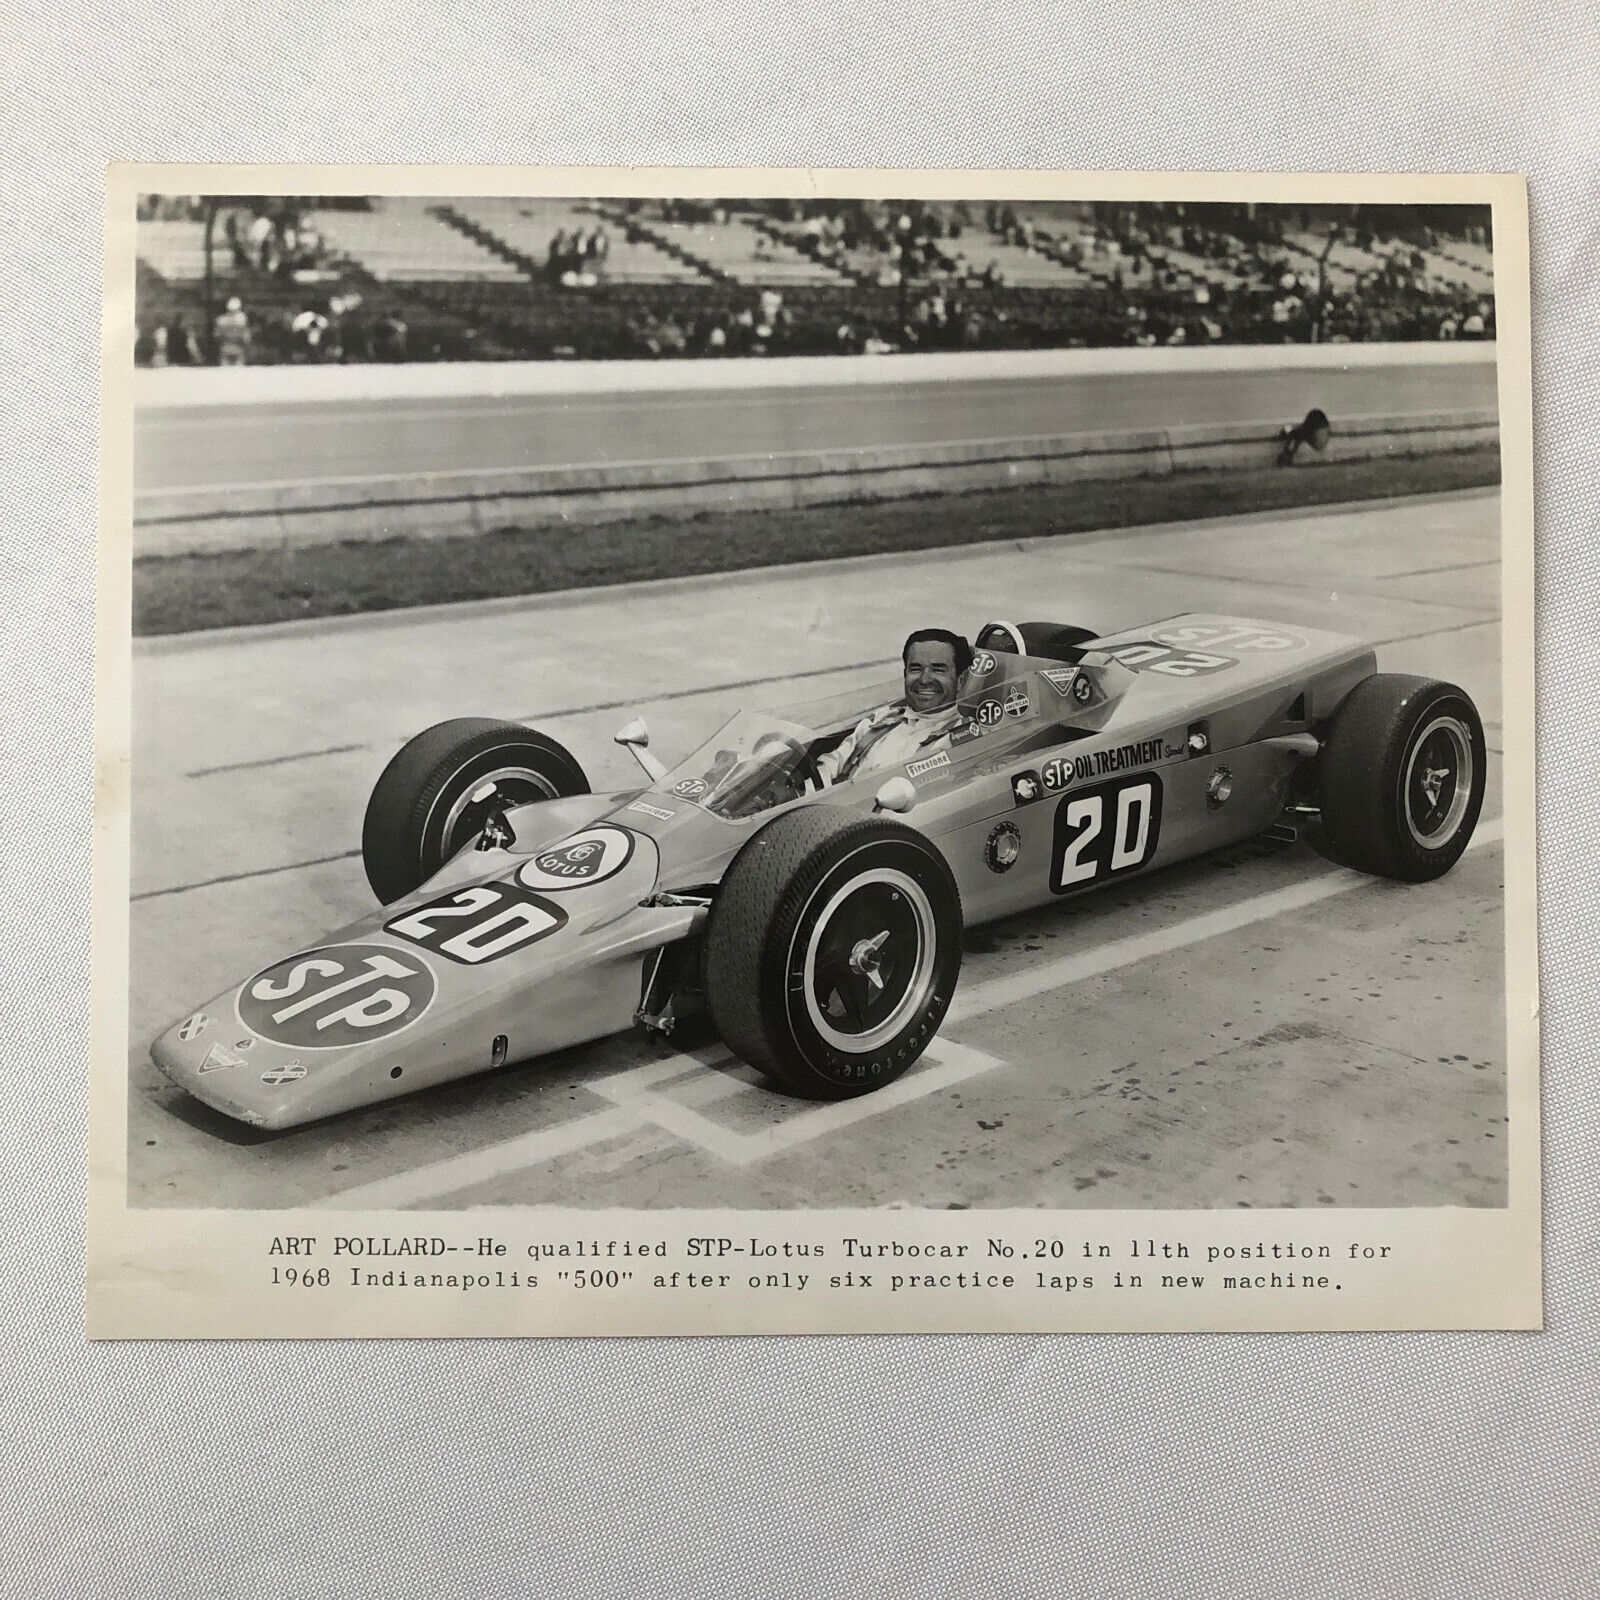 Vintage Indy Indianapolis 500 Racing Photo Photograph Art Pollard STP Lotus 1968